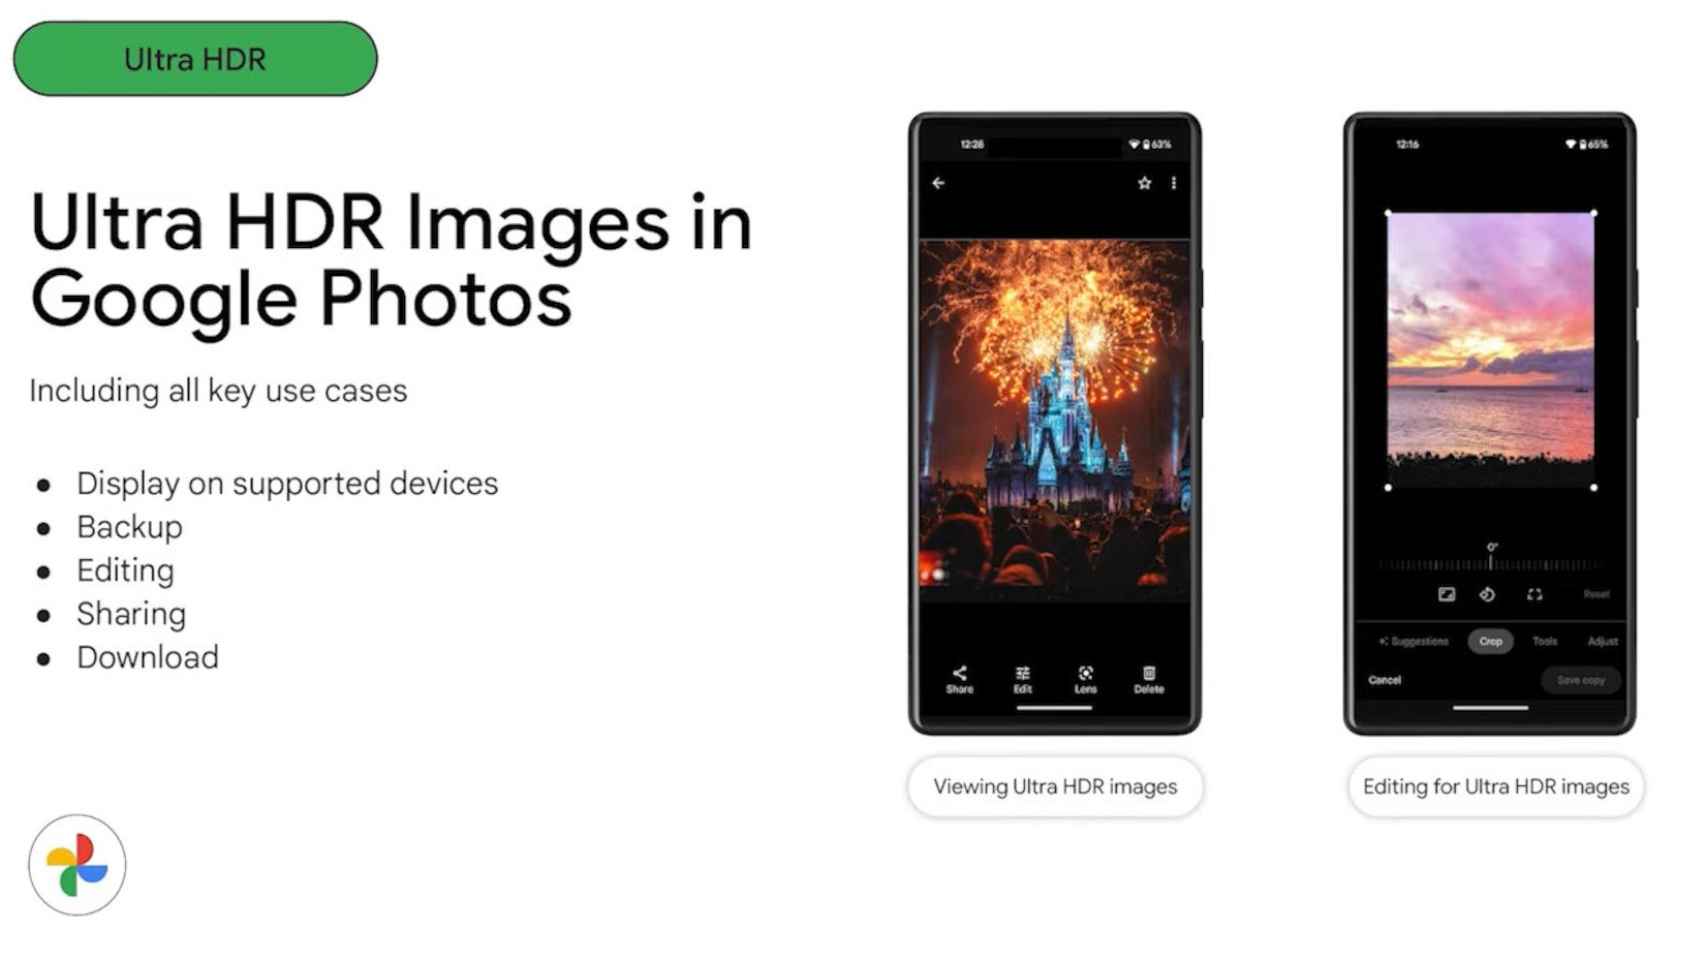 Google Fotos podrá mostrar y editar fotos en Ultra HDR